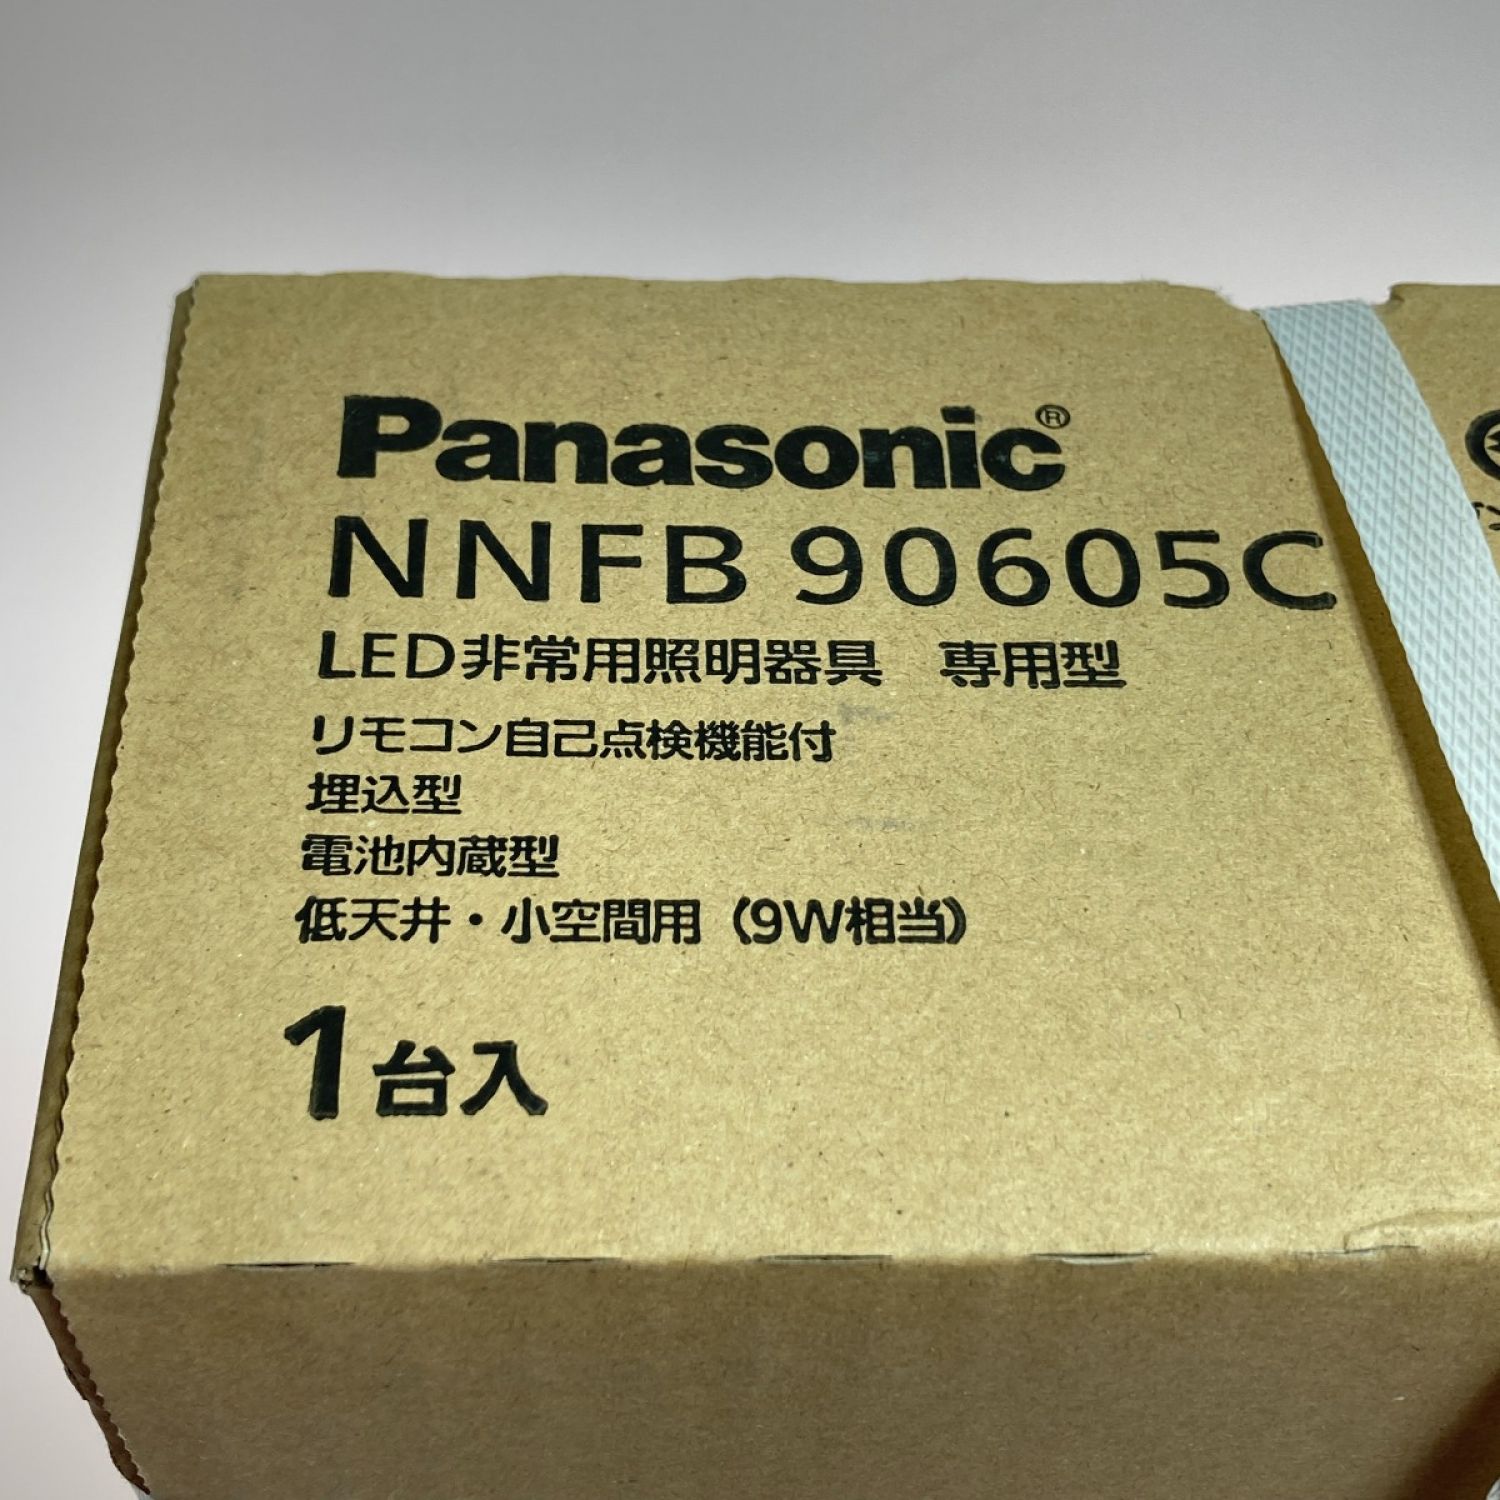 Panasonic パナソニック NNFB 90605C LED非常用照明器具 専用型 2個セット NNFB90605C Nランク